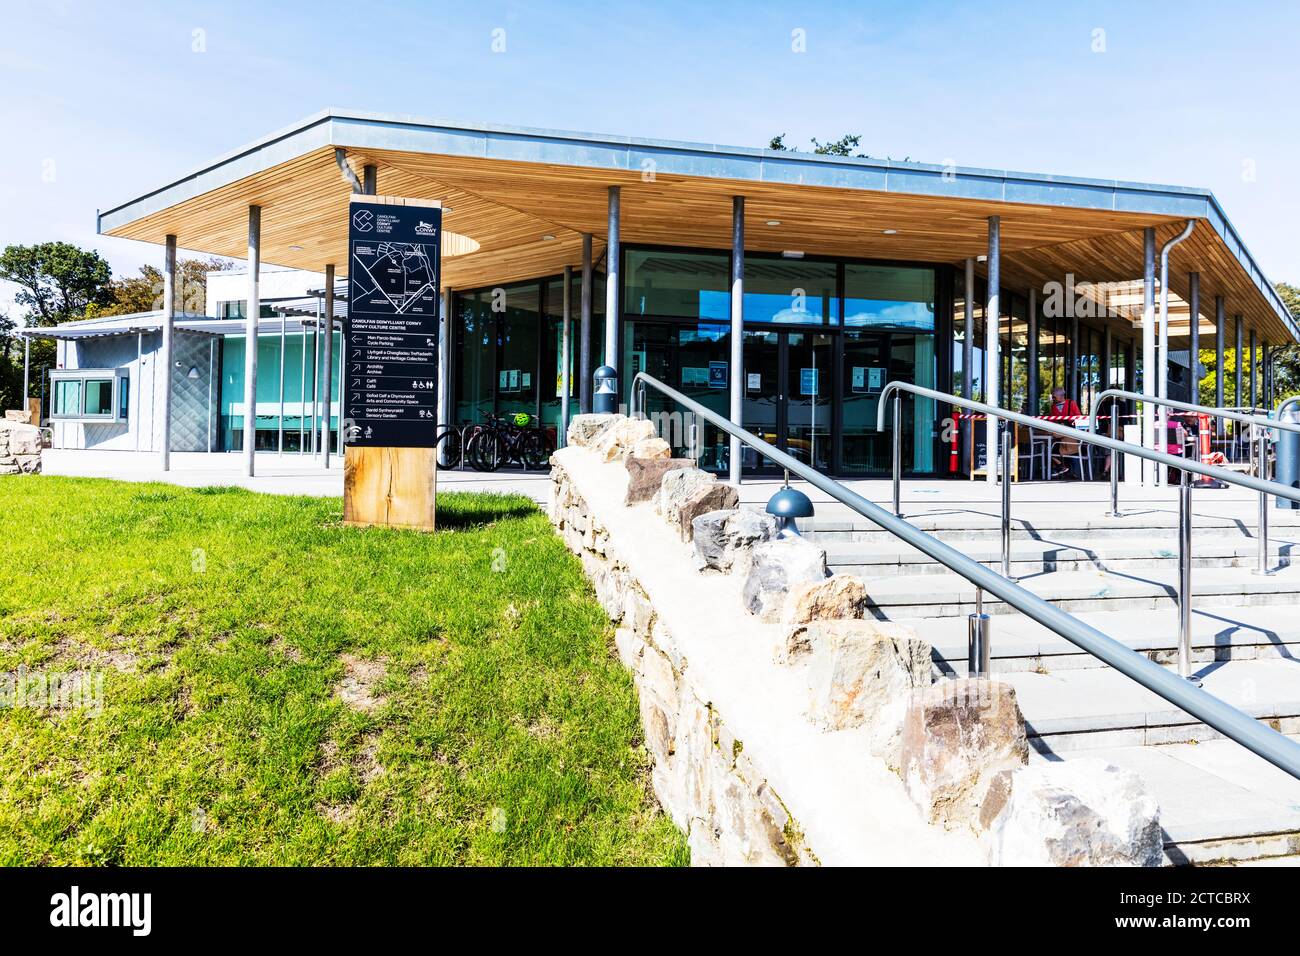 Conwy Culture Centre, Conwy, Conwy town, Conwy Wales, Wales, North Wales, UK, Conwy Library, conwy, Culture Centre, building, exterior, sign, entrance Stock Photo